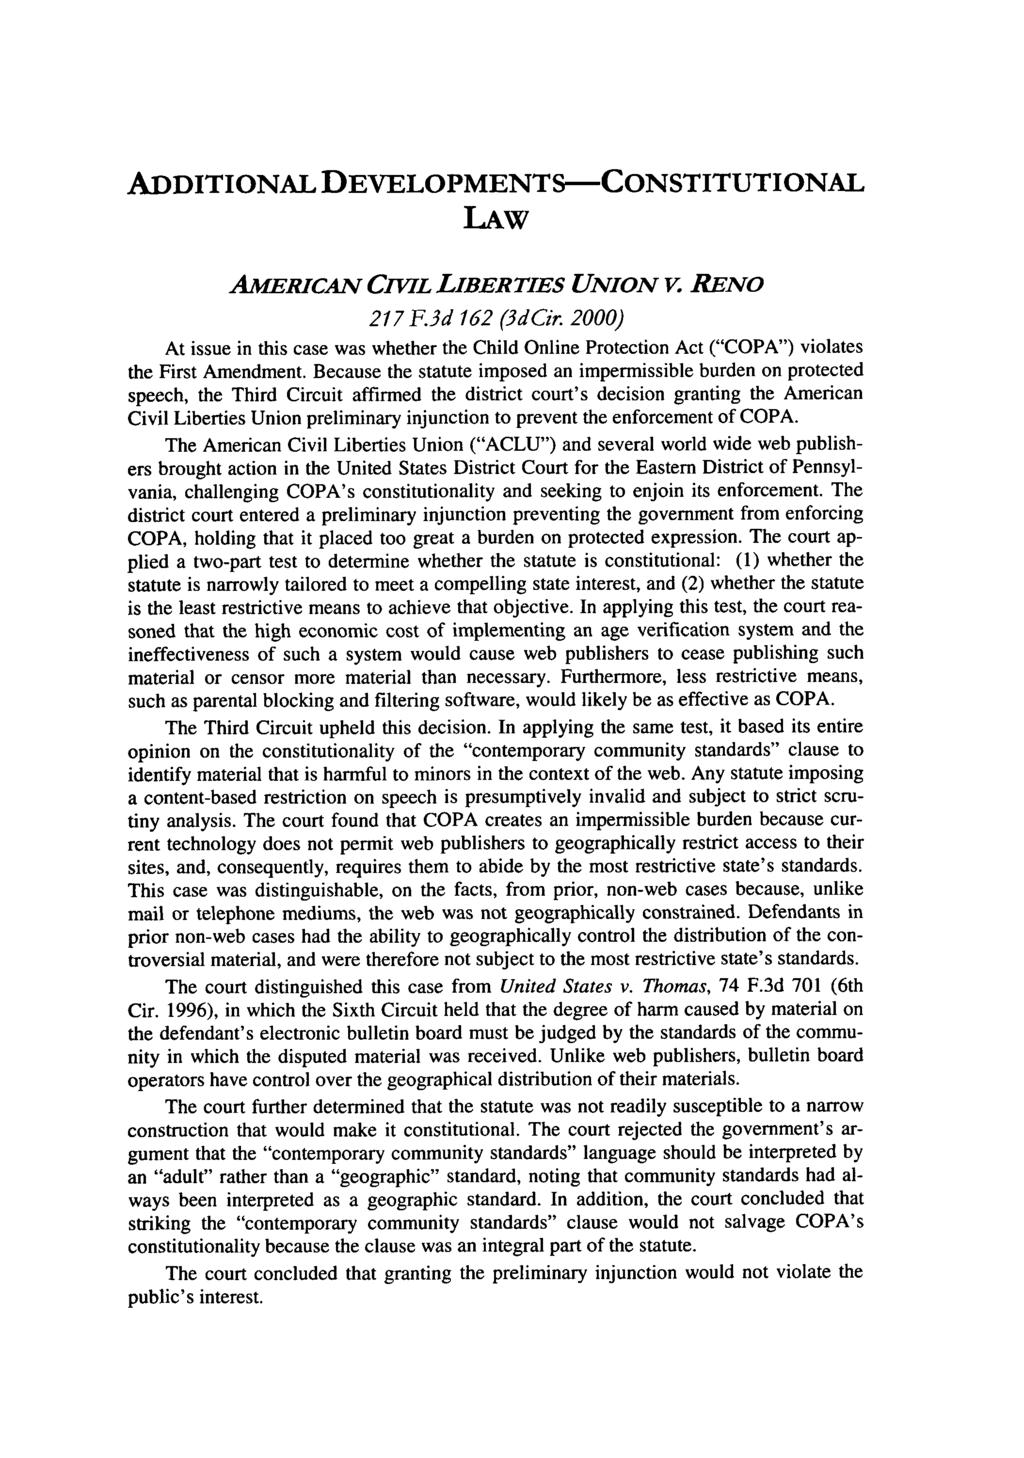 ADDITIONAL DEVELOPMENTS-CONSTITUTIONAL LAW AMERICAN CIVIL LIBERTIES UNION V. RENO 217 F.3d 162 (3dCir.